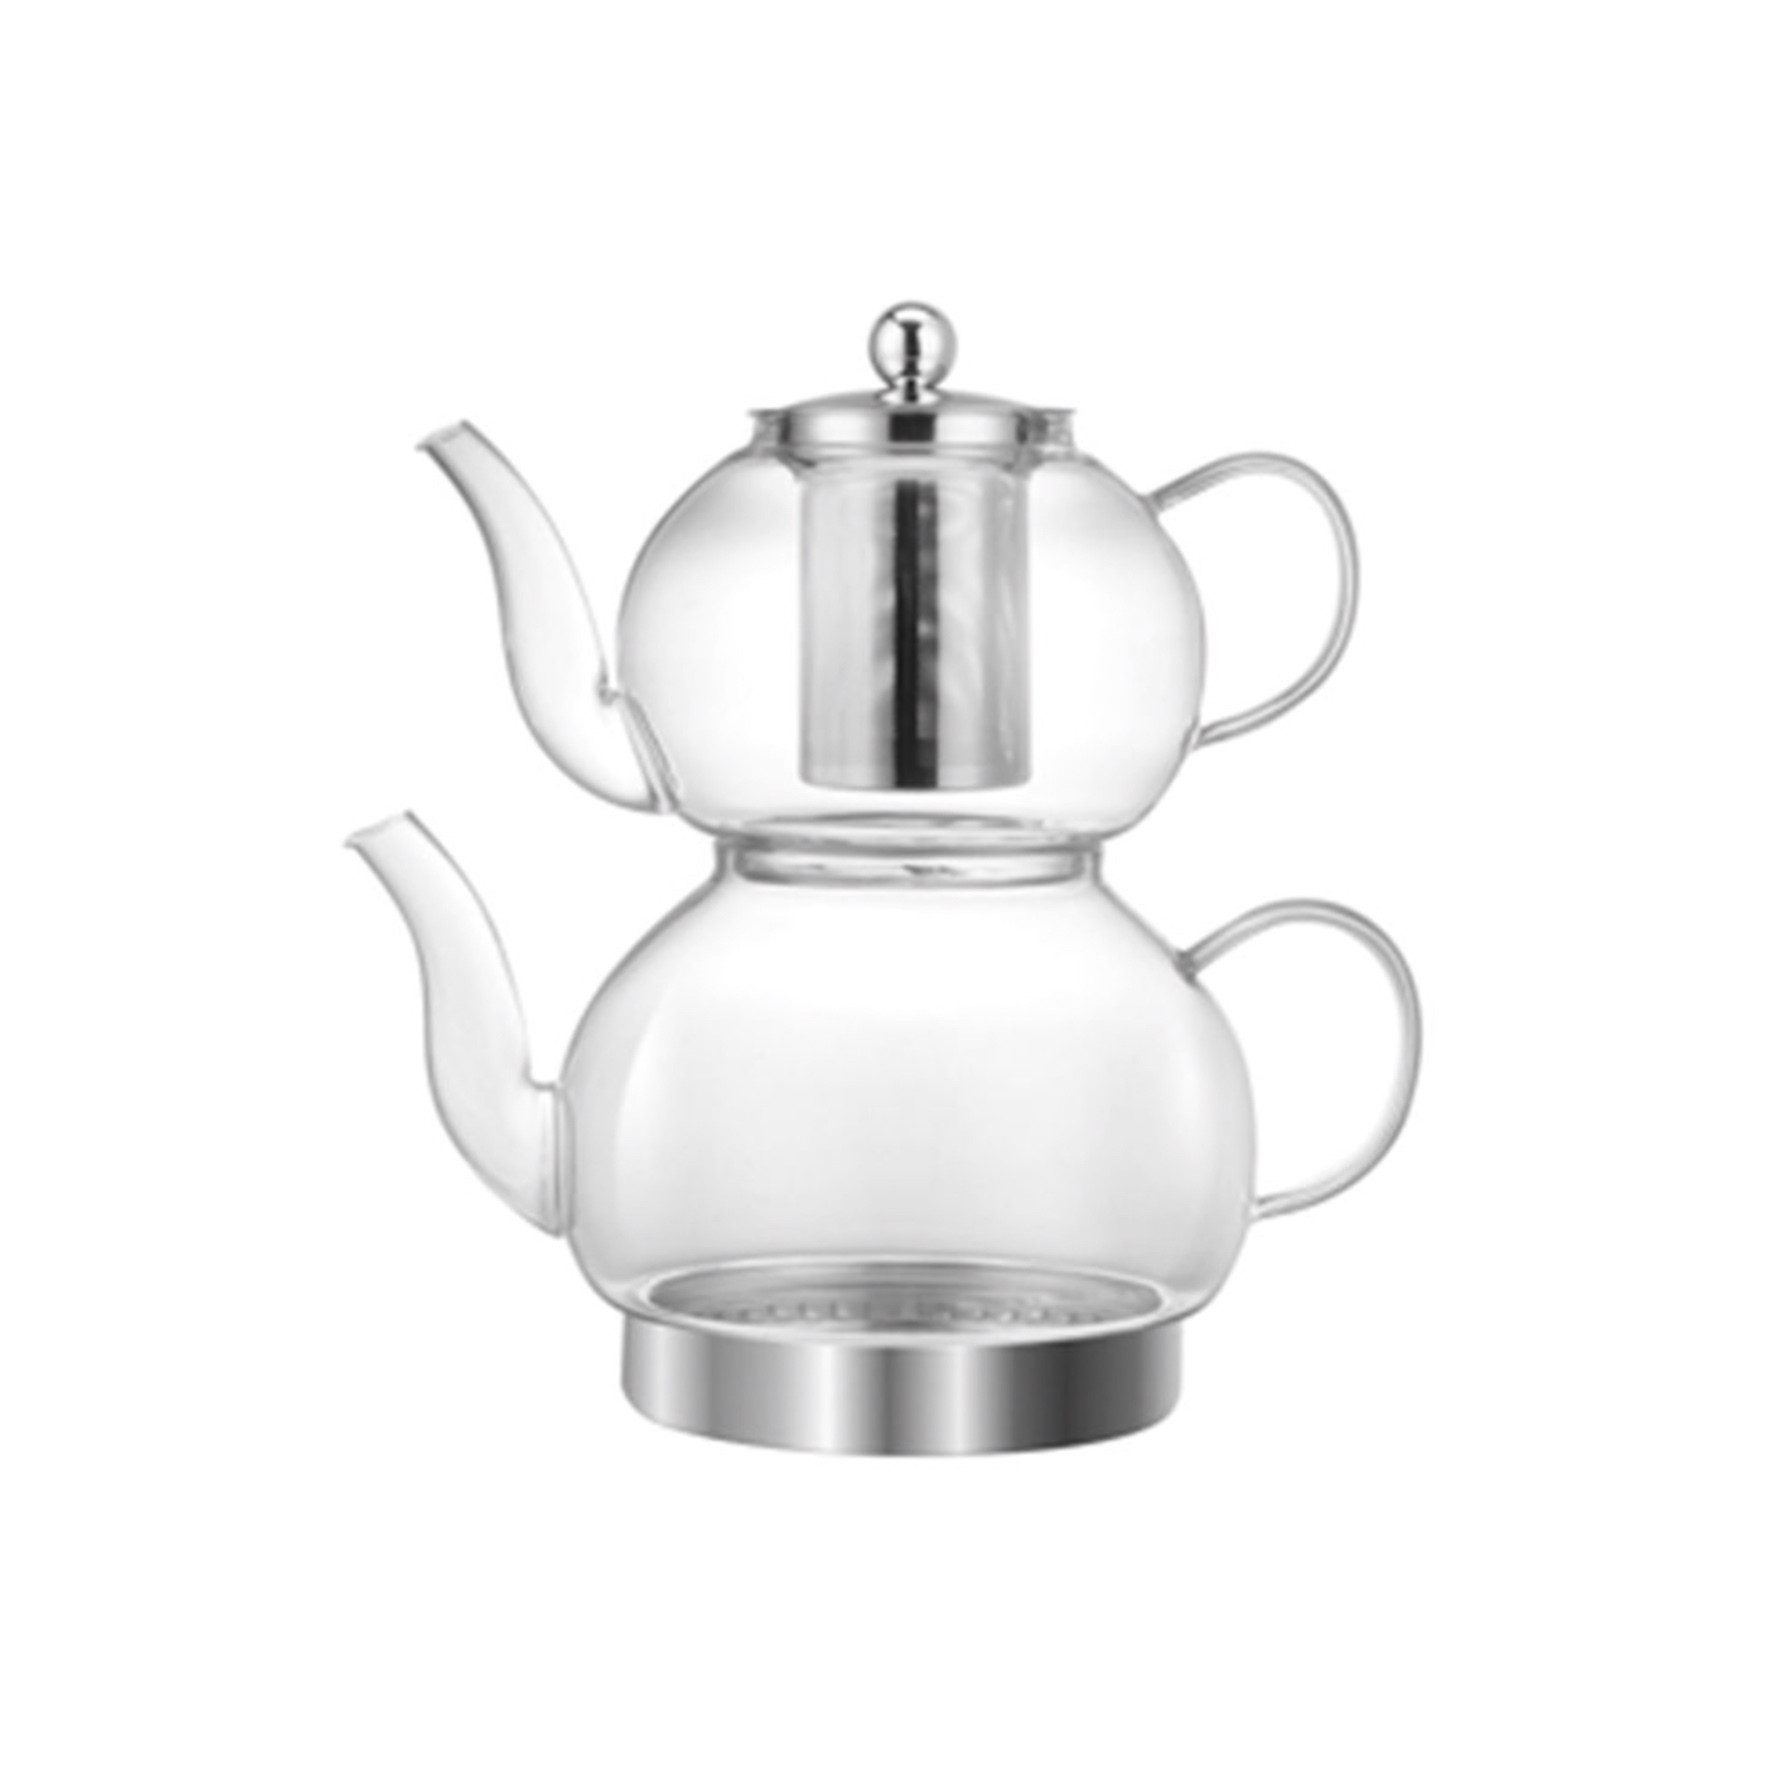 Asphald Teekanne Glas-Teekanne 1,0 / 2,0 L Induktion geeignet incl Teesieb, 1 l, (Set), Gold Sieb